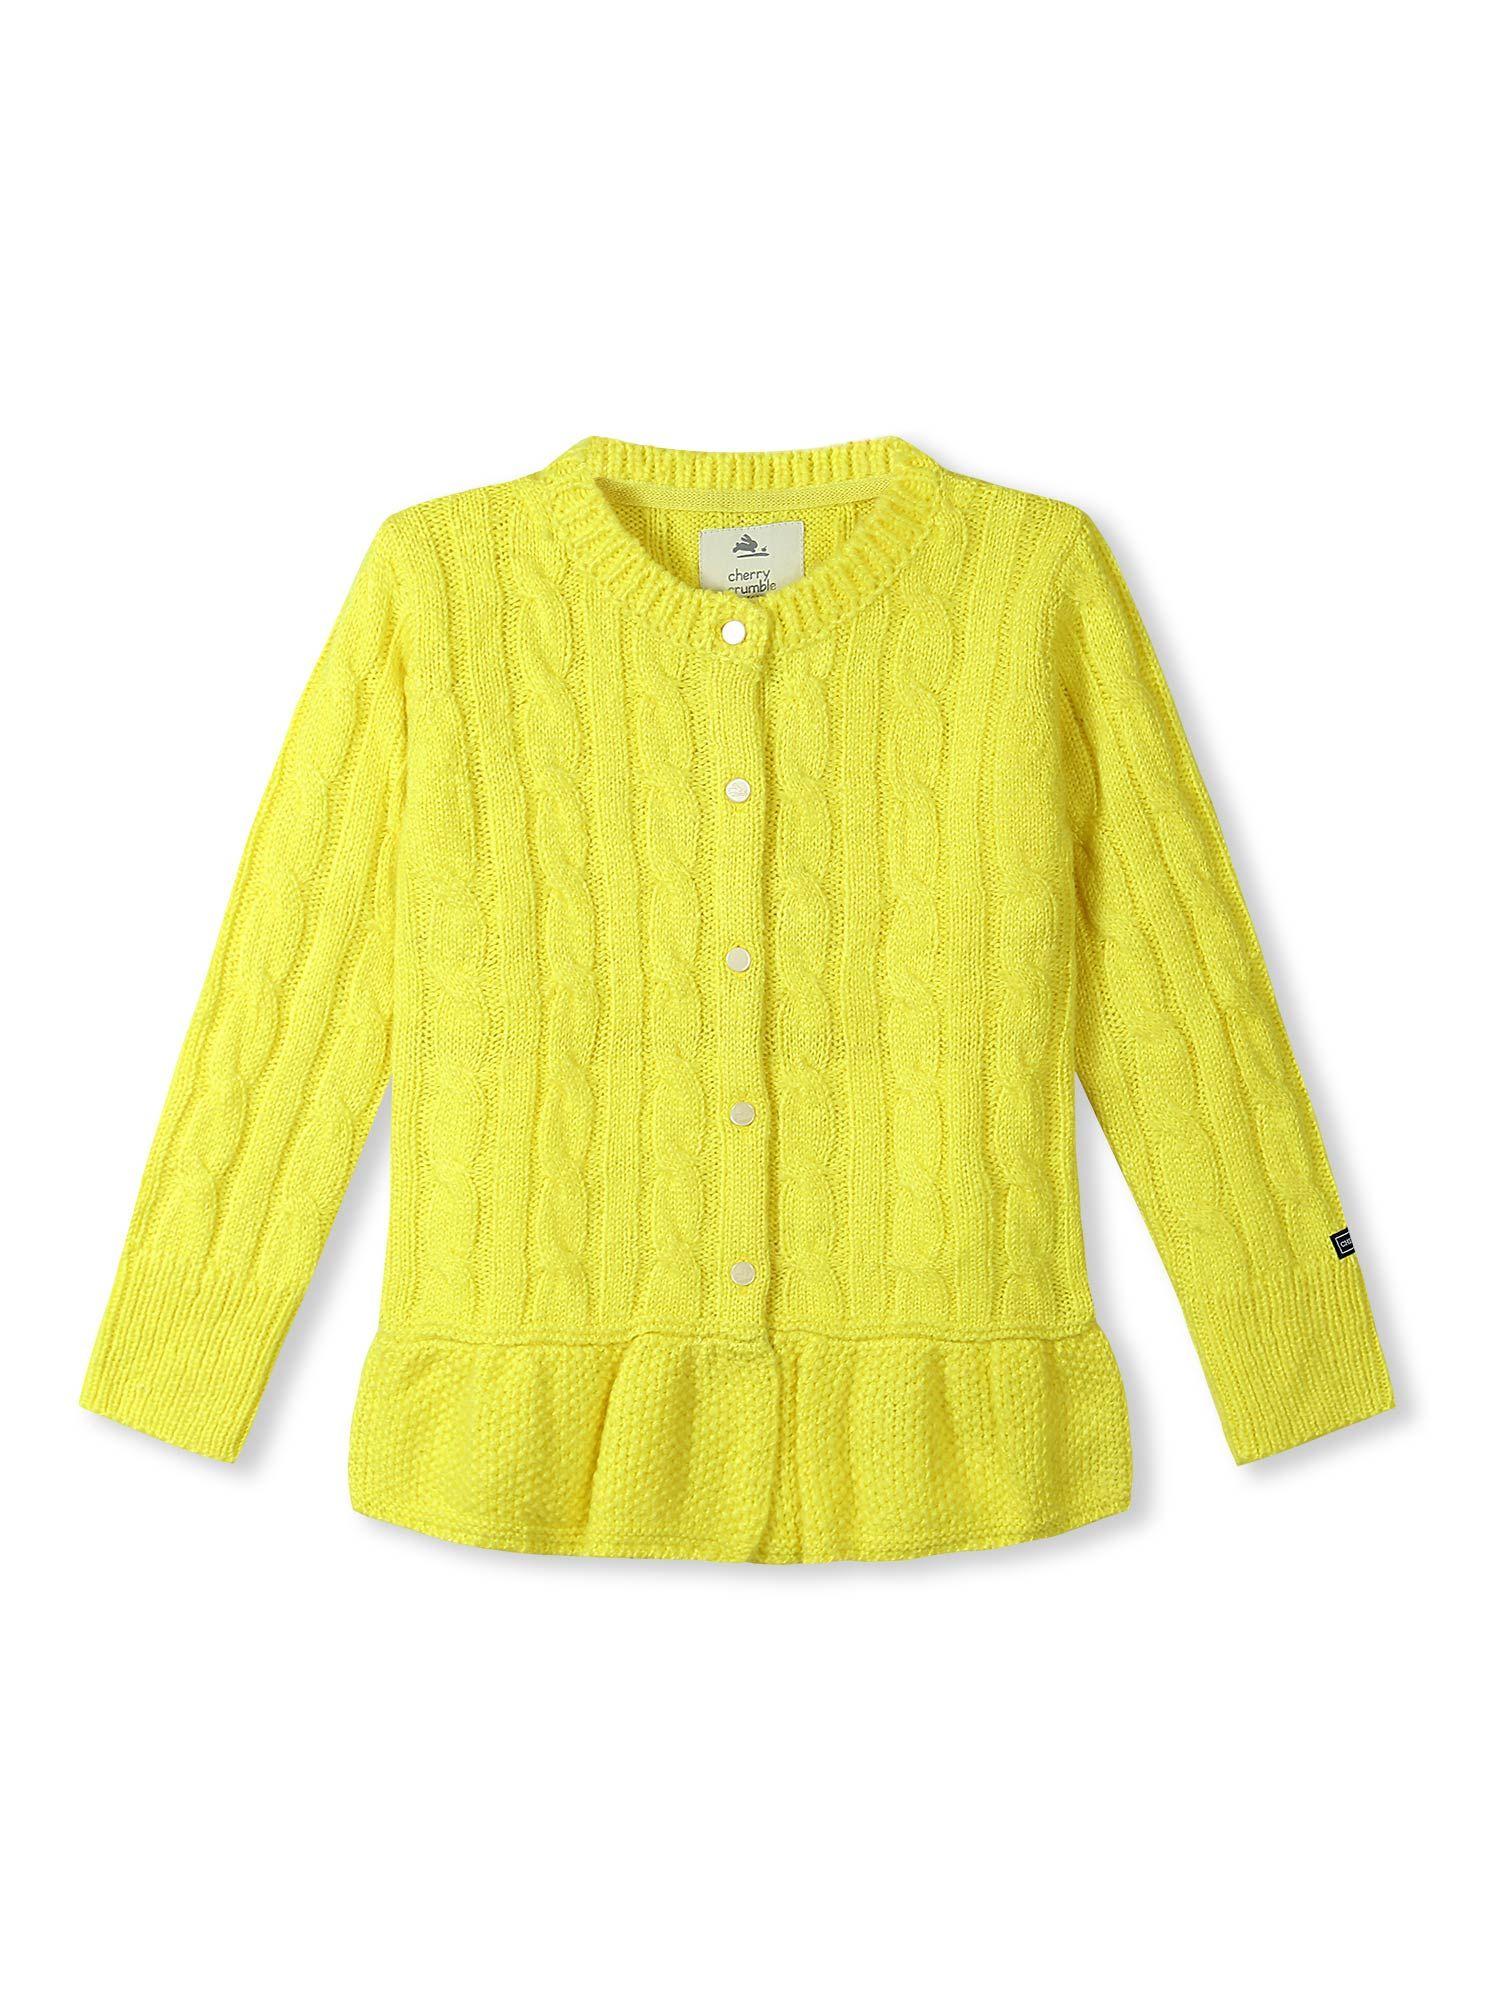 girls yellow soft cable-knit peplum cardigan sweater